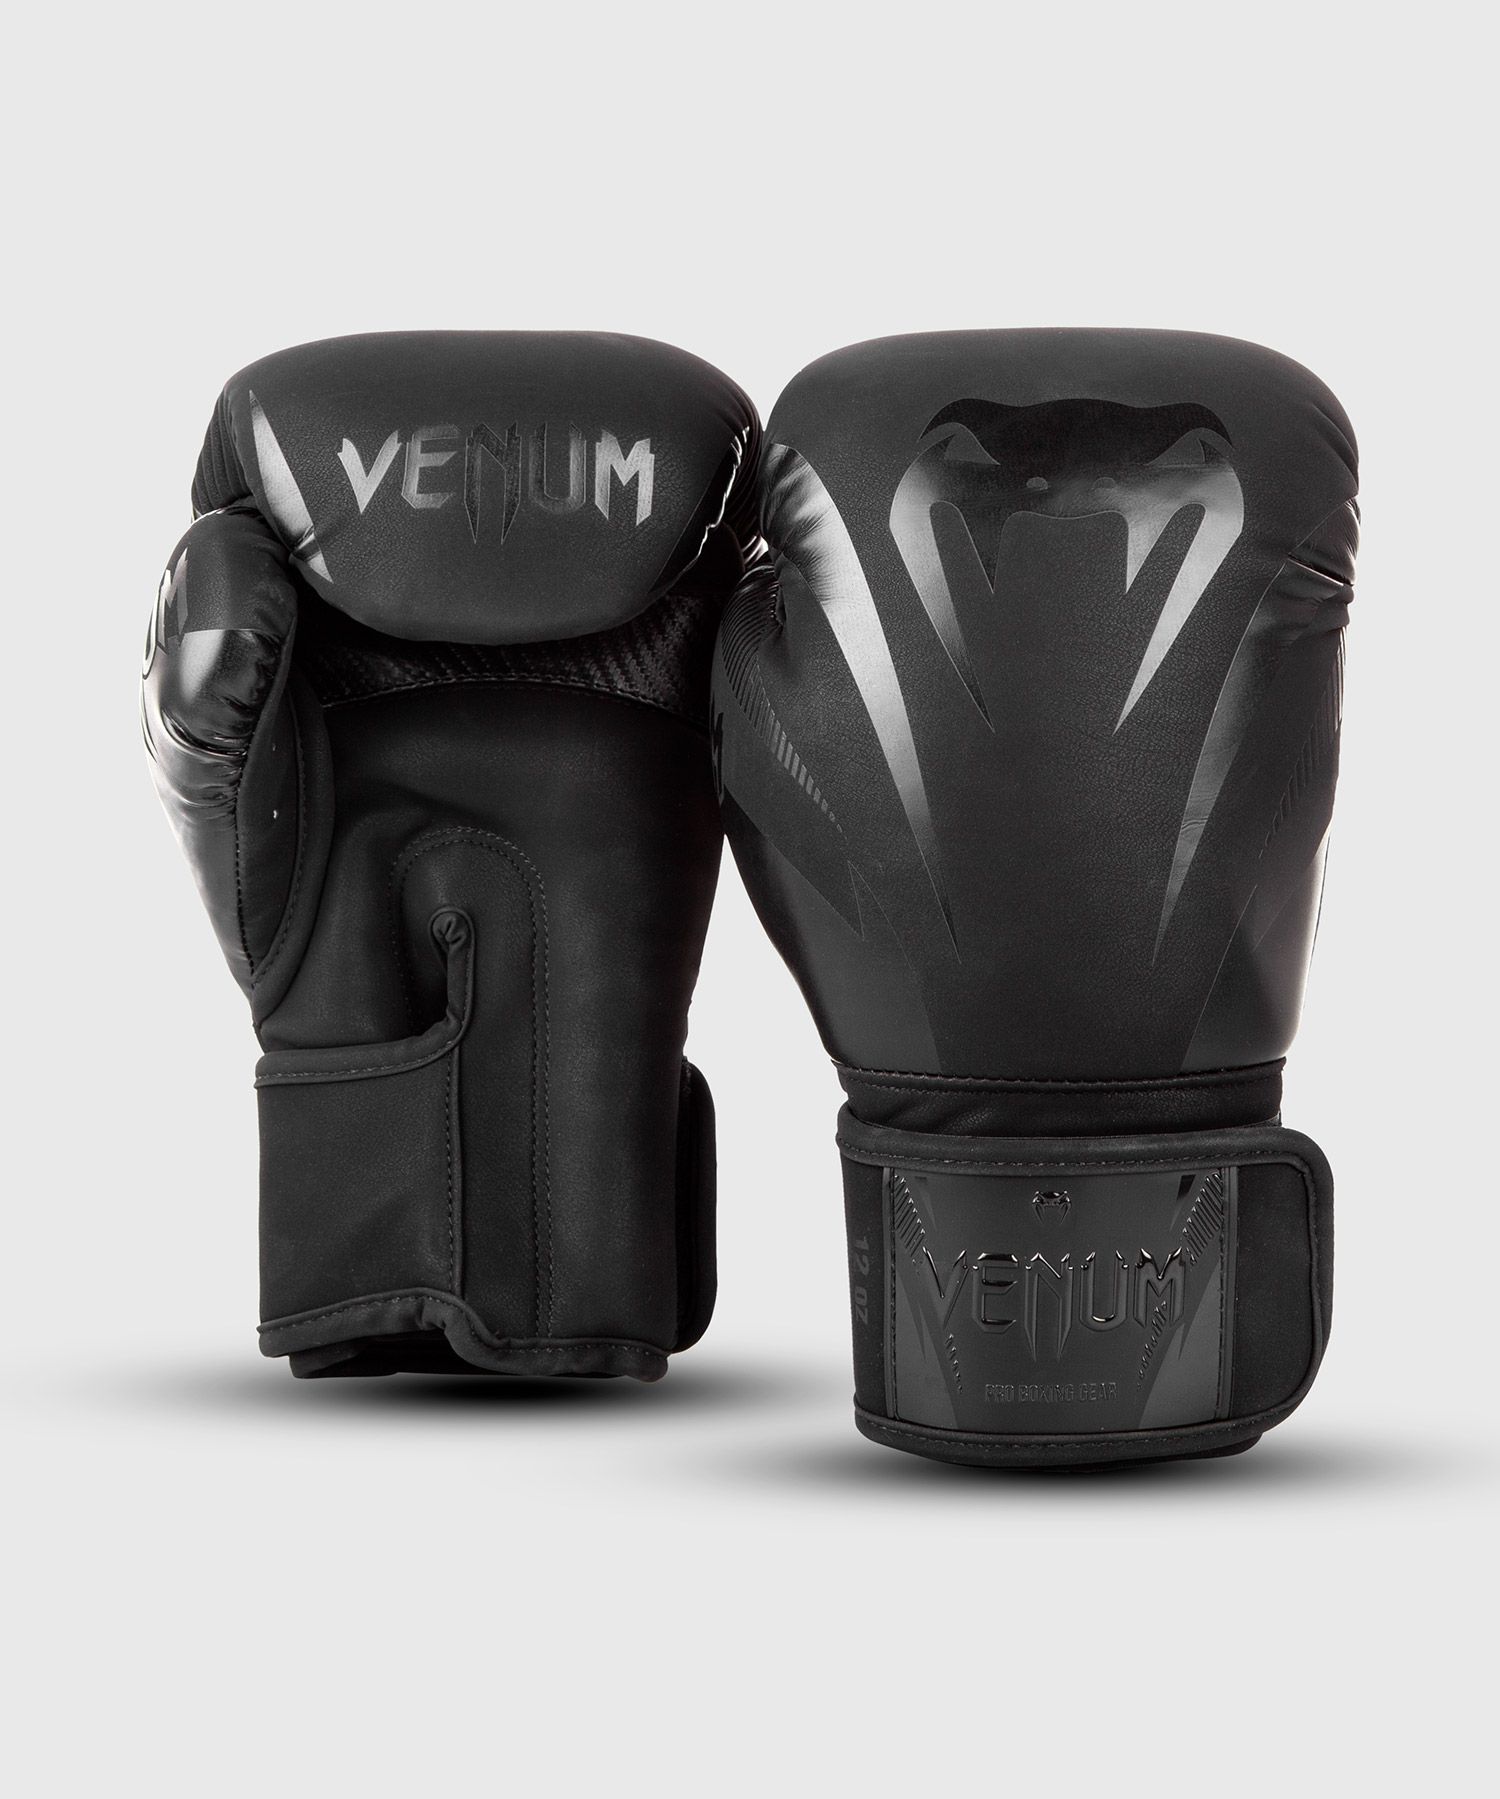 Venum Impact ボクシンググローブ - ブラック/ブラック